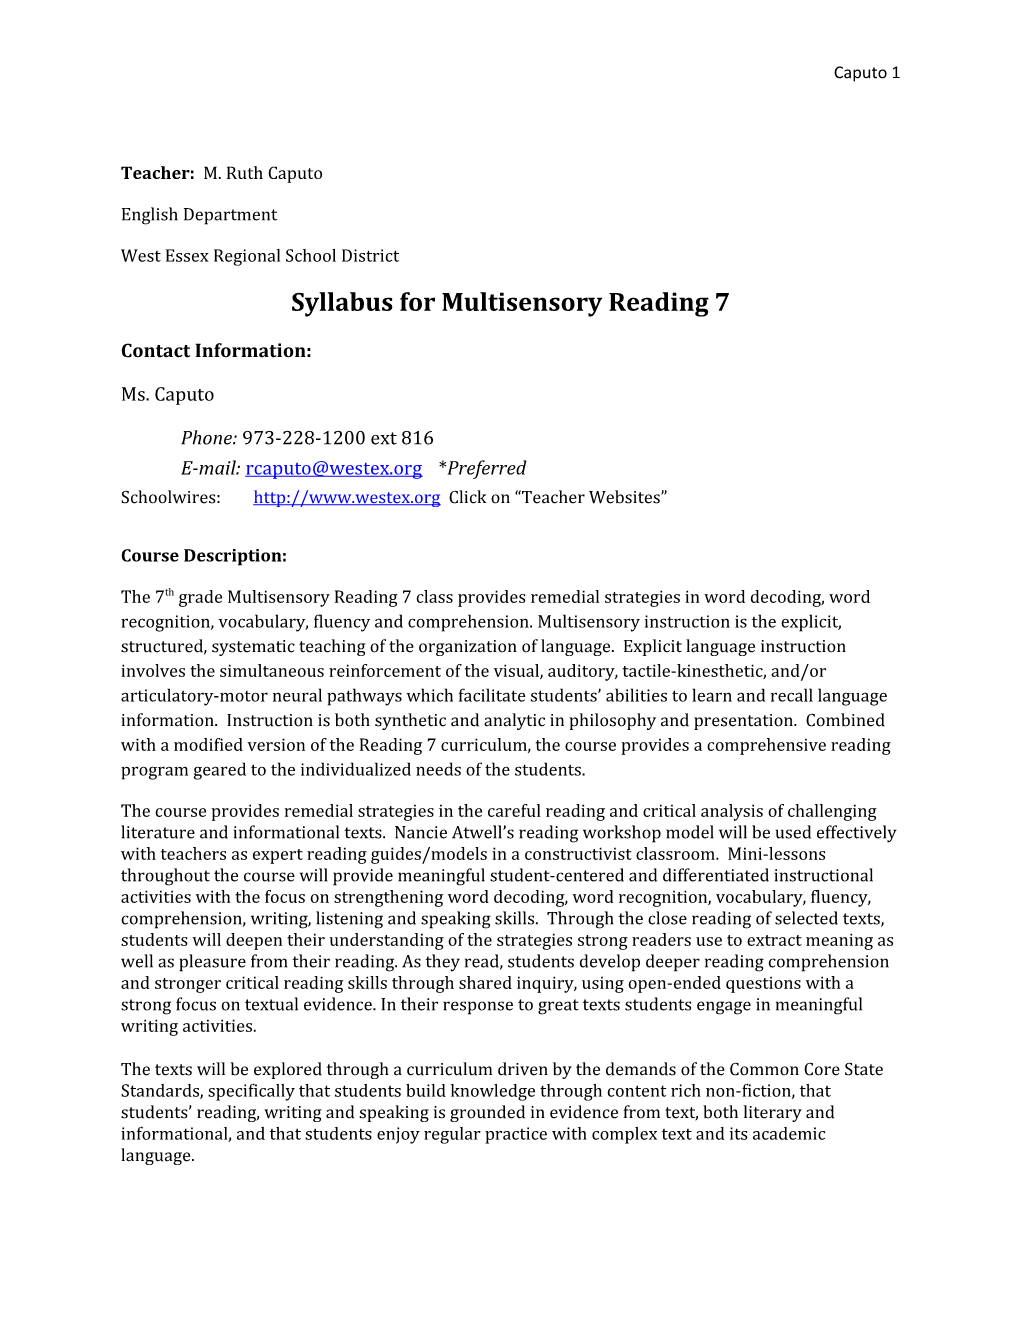 Syllabus for Multisensory Reading 7